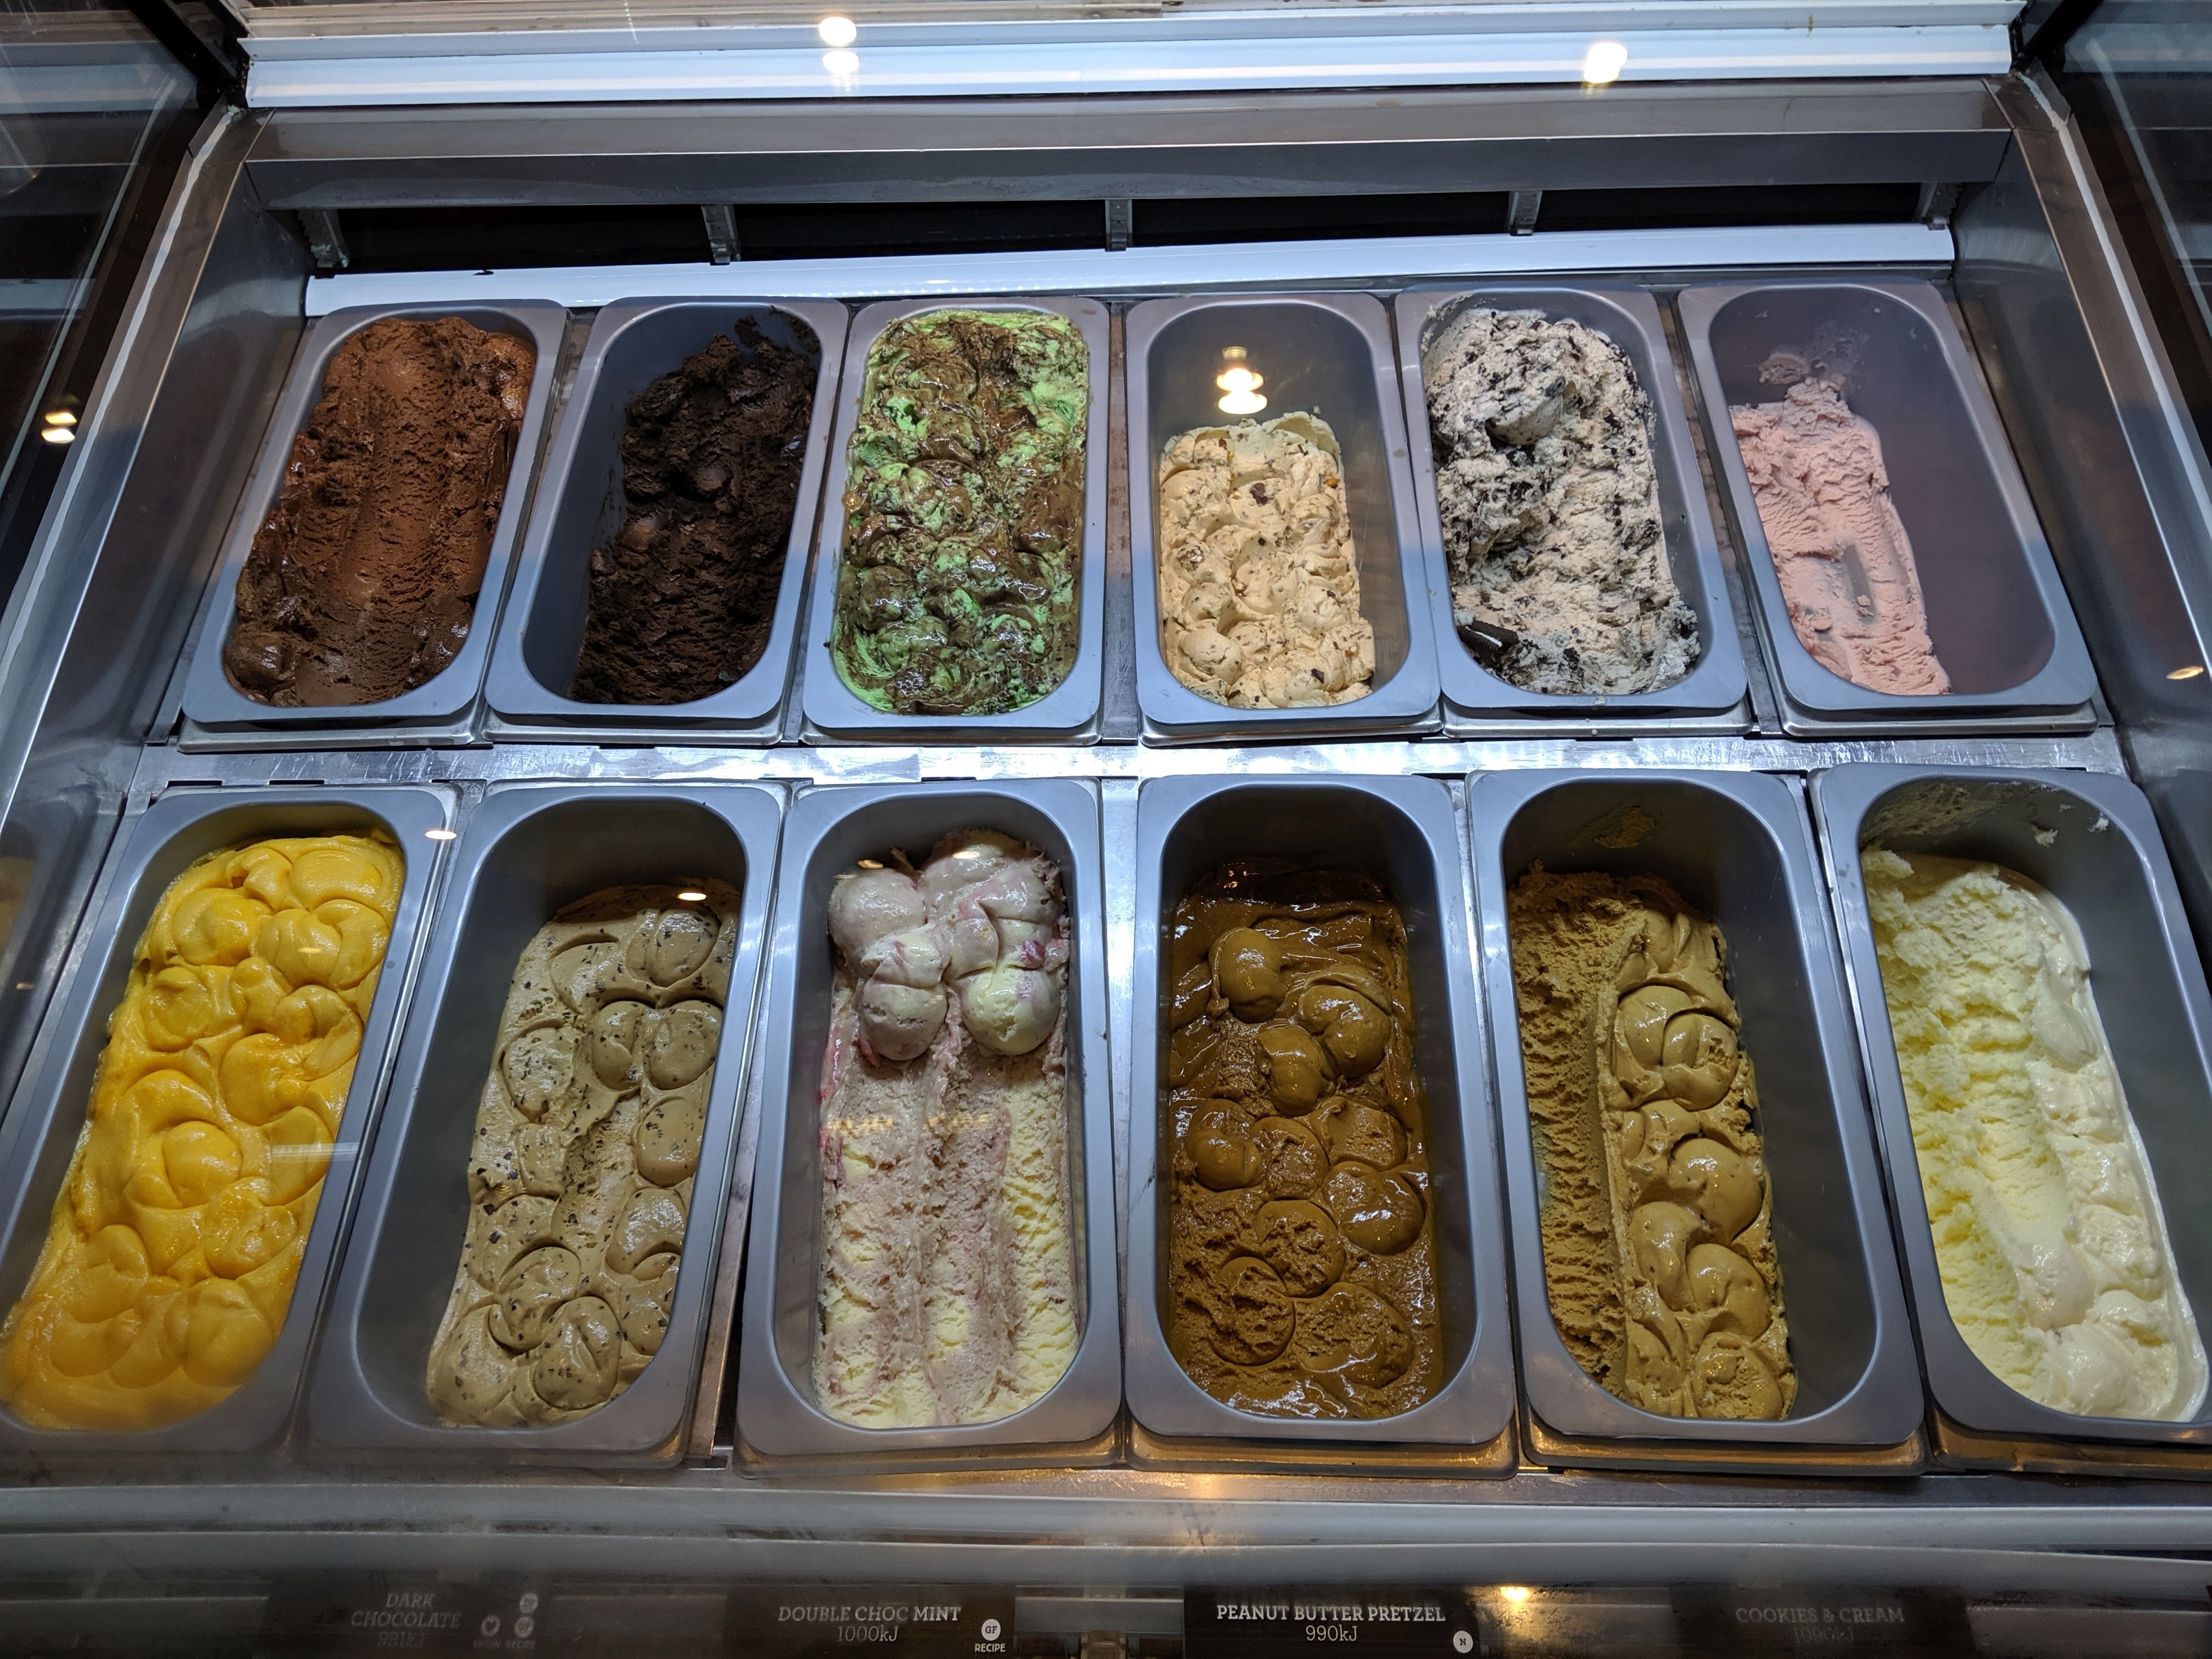 Caption: Different flavors of ice cream